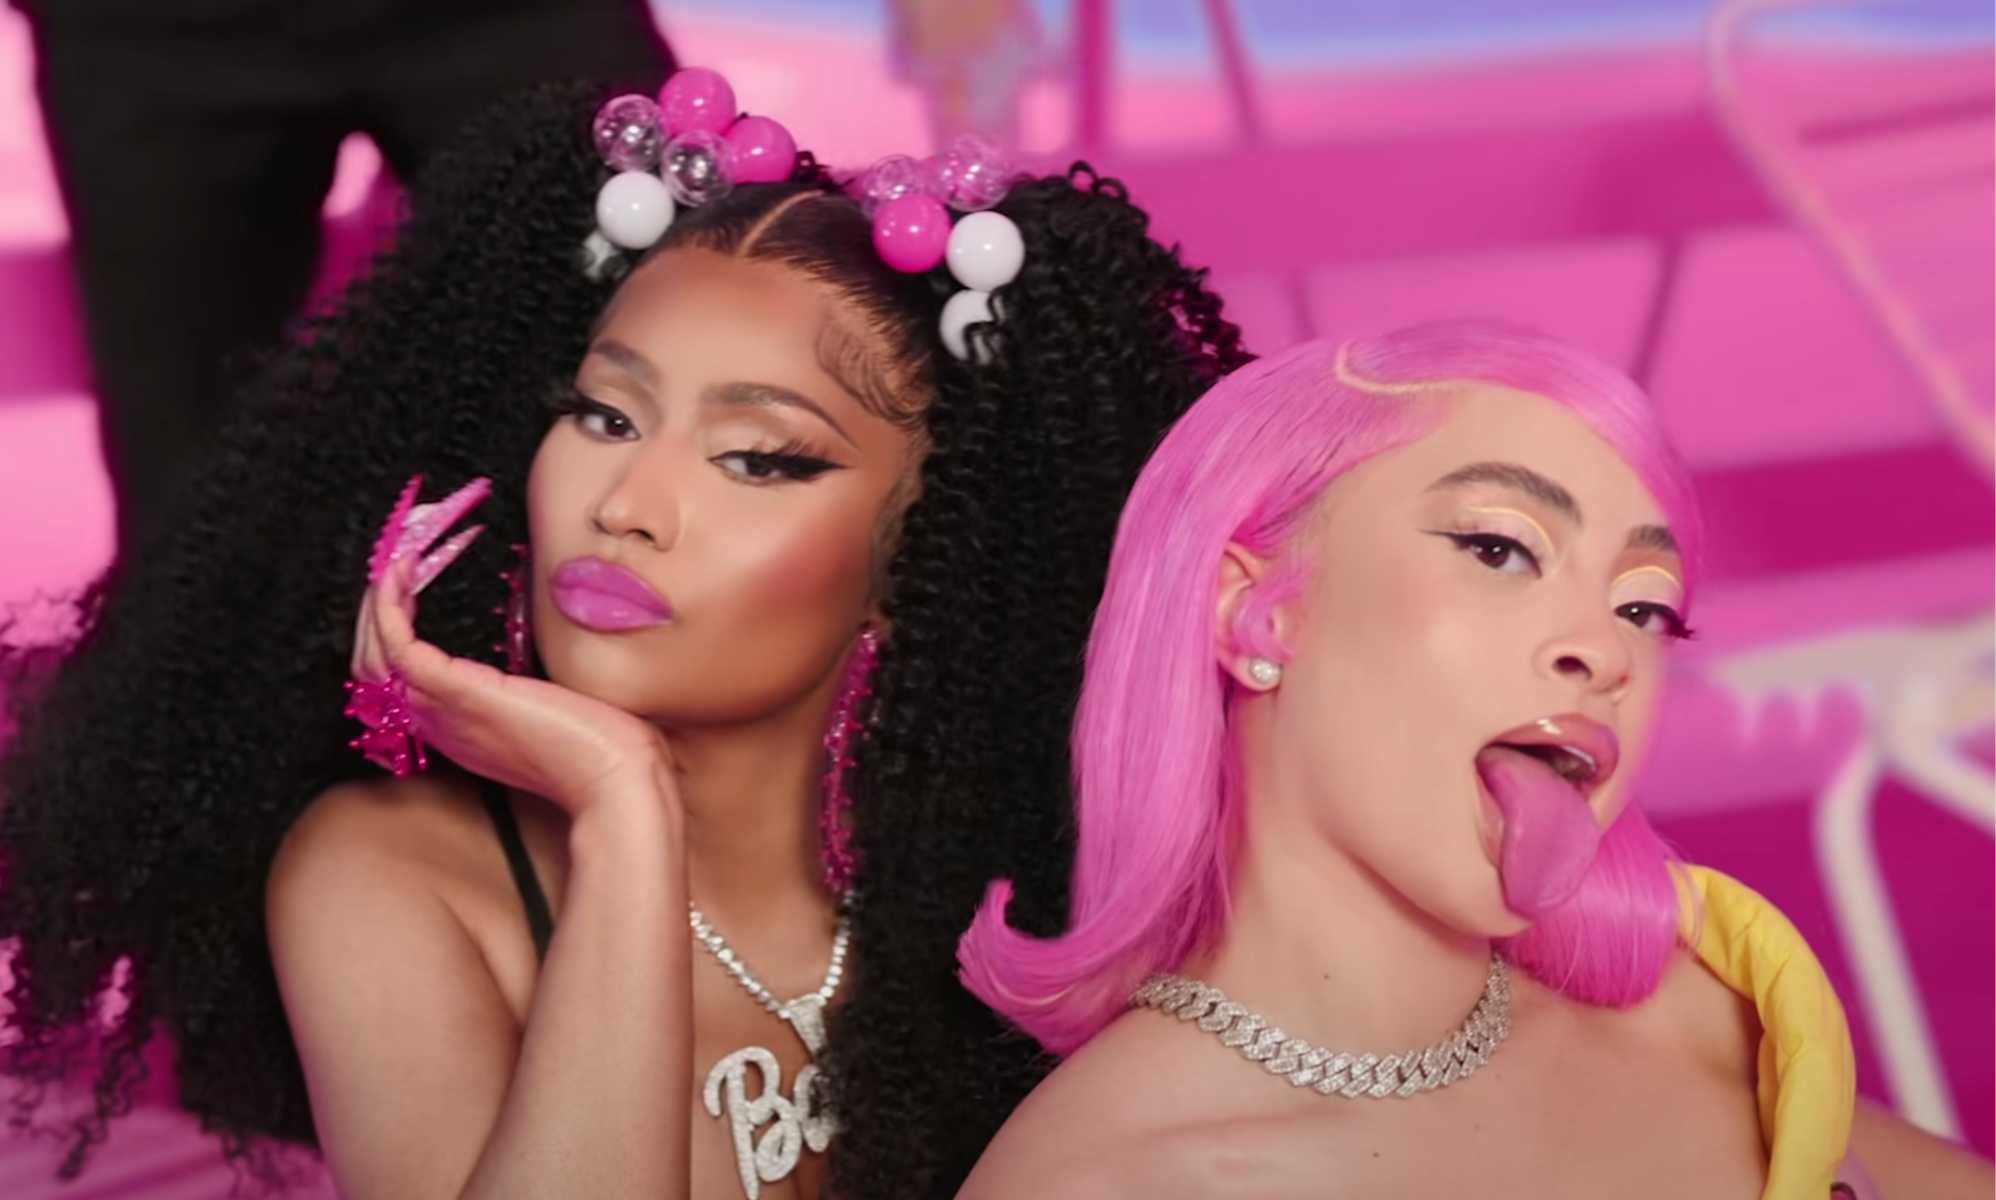 Nicki Minaj Lesbian Sex - Ice Spice, Nicki Minaj gag fans with plastic fantastic Barbie World